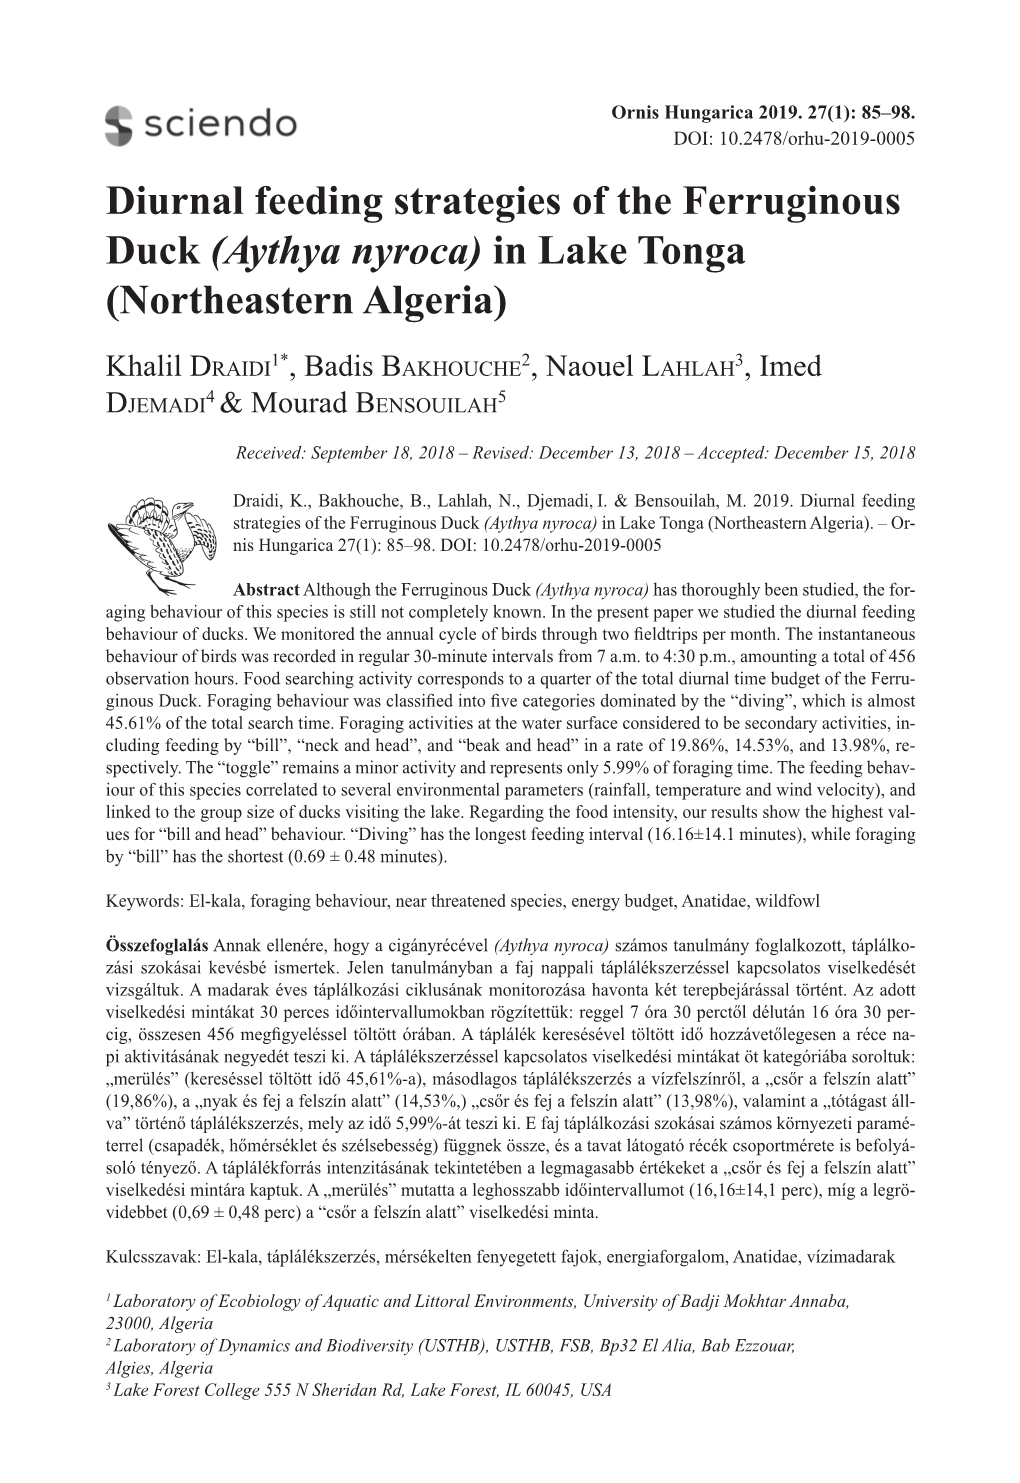 Diurnal Feeding Strategies of the Ferruginous Duck (Aythya Nyroca) in Lake Tonga (Northeastern Algeria)